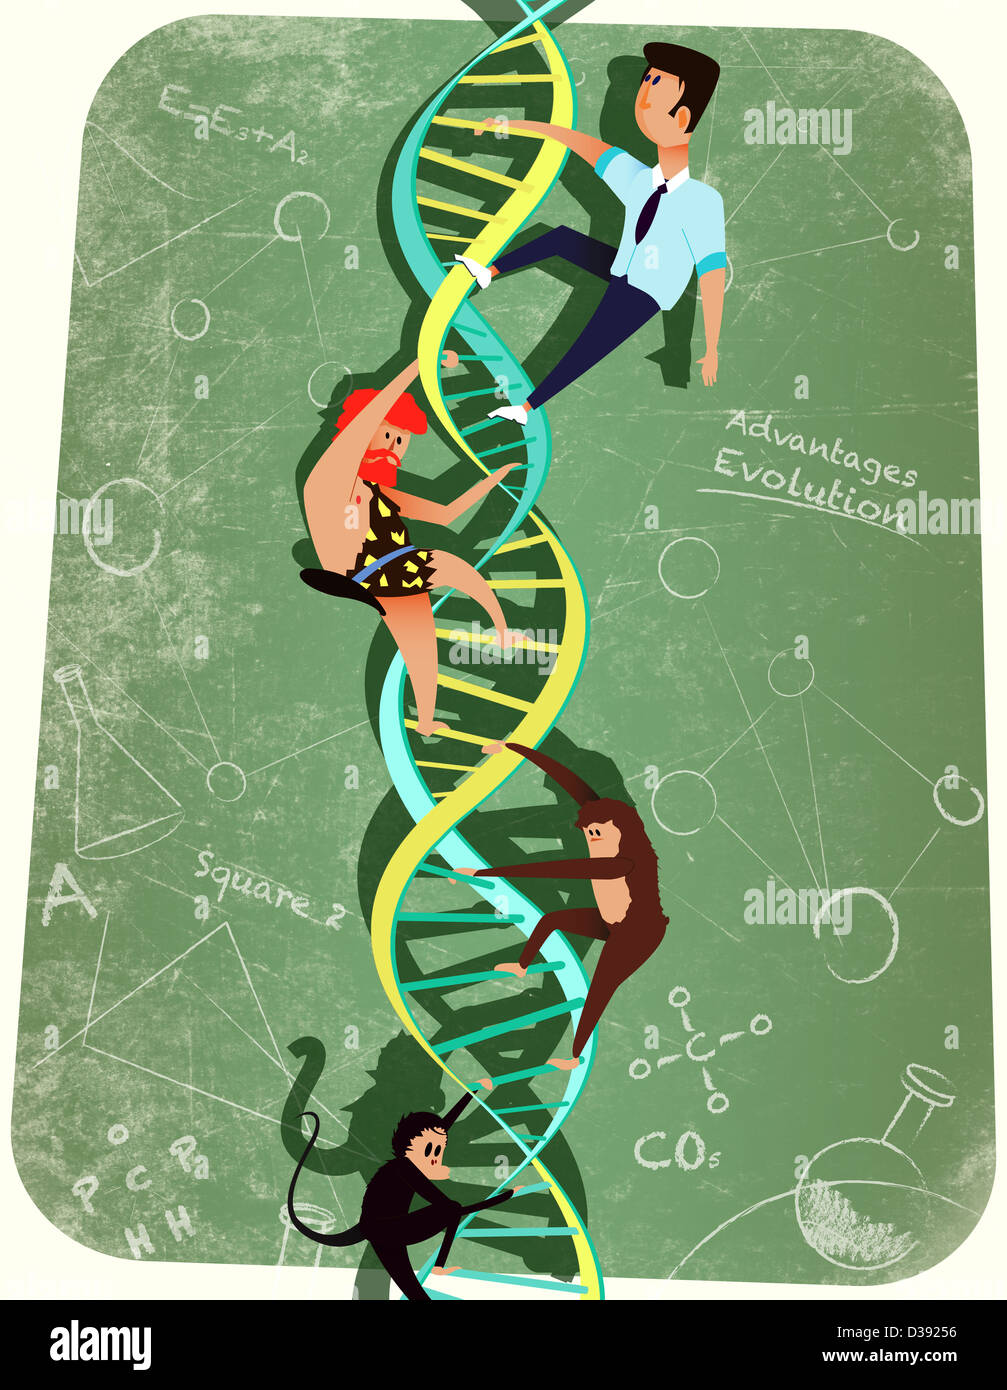 Brin d'ADN représentant l'évolution des êtres humains Banque D'Images